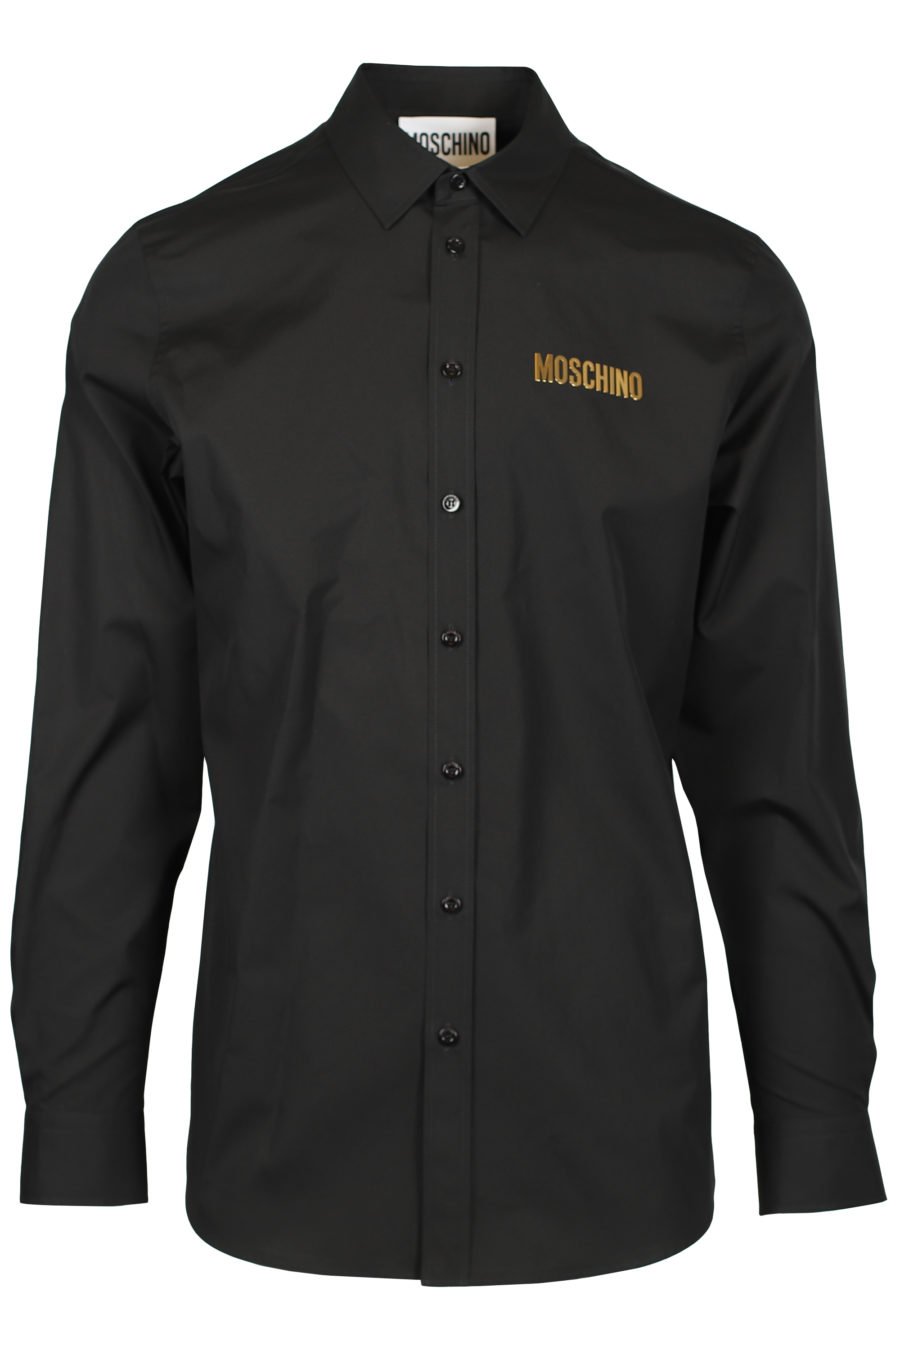 Camisa negra con logo dorado - IMG 2564